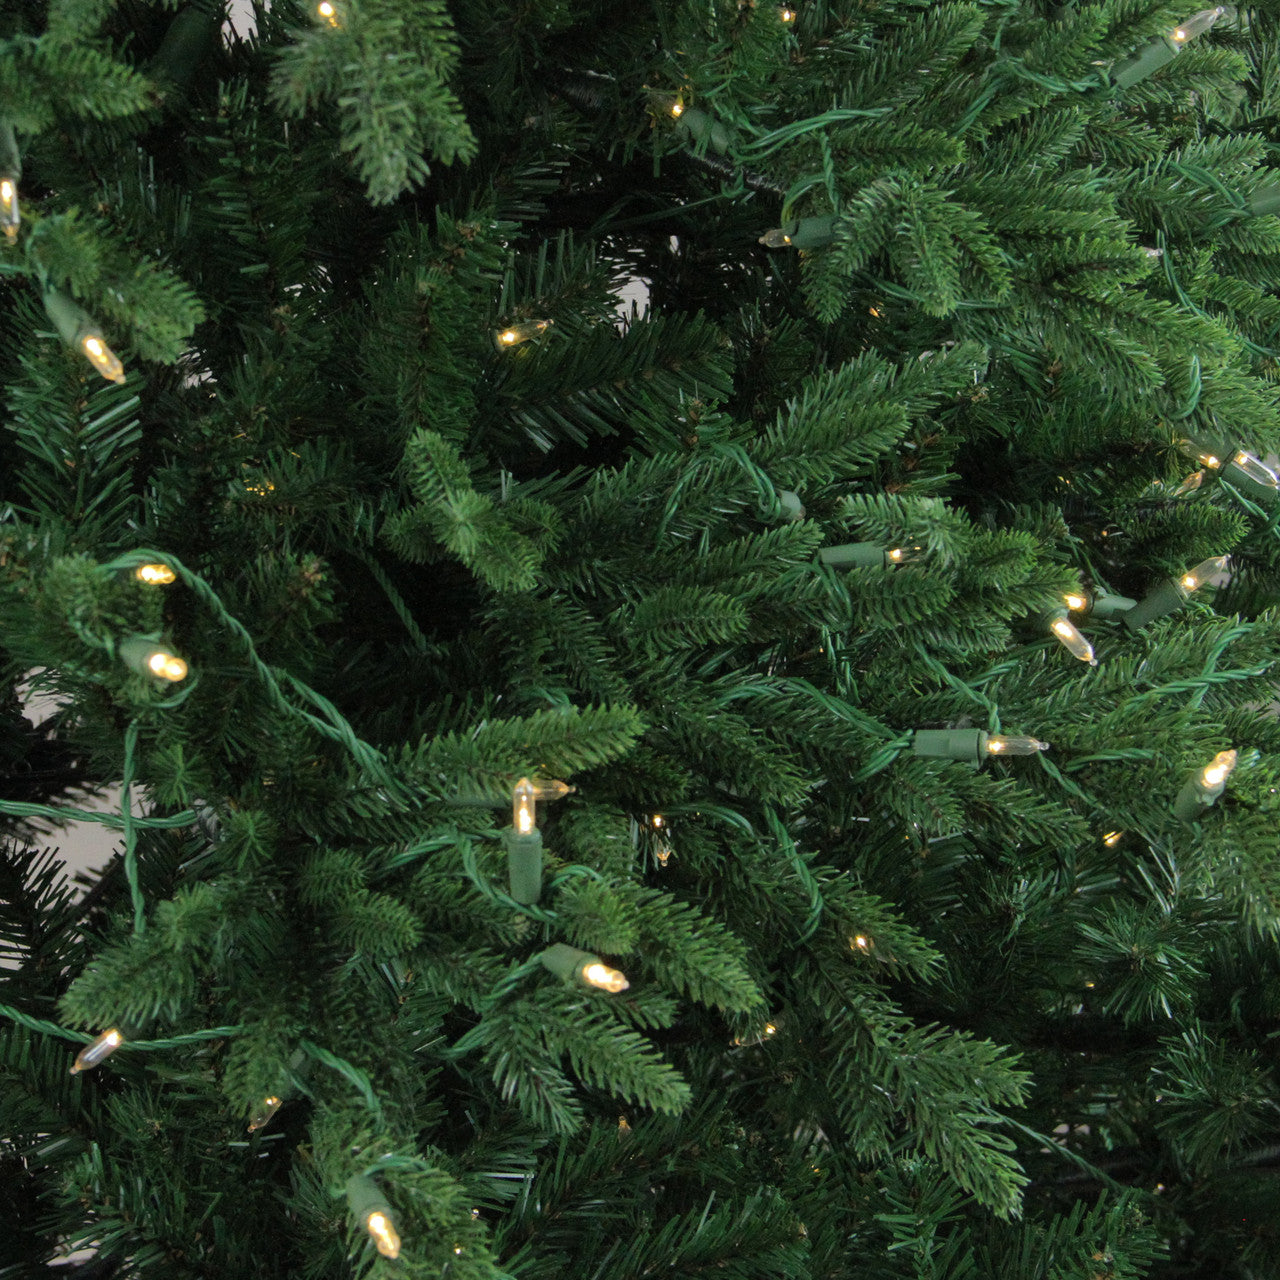 9' Pre-Lit Full Minnesota Balsam Fir Artificial Christmas Tree - Clear LED Lights